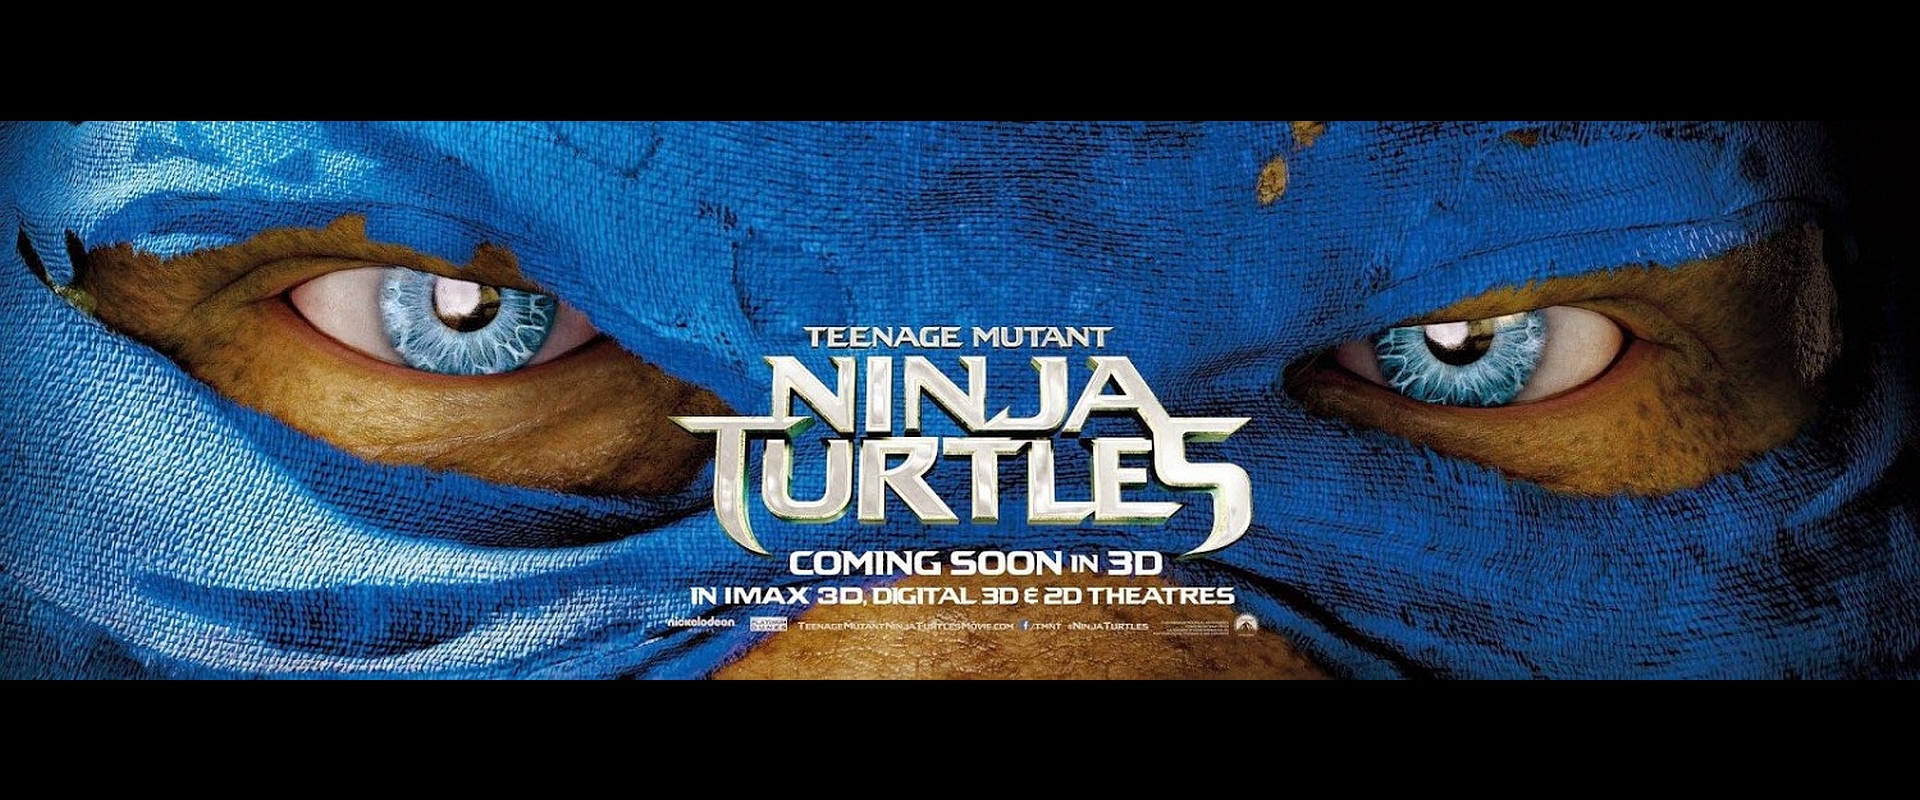 339713 Bild herunterladen filme, teenage mutant ninja turtles (2014), teenage mutant ninja turtles - Hintergrundbilder und Bildschirmschoner kostenlos